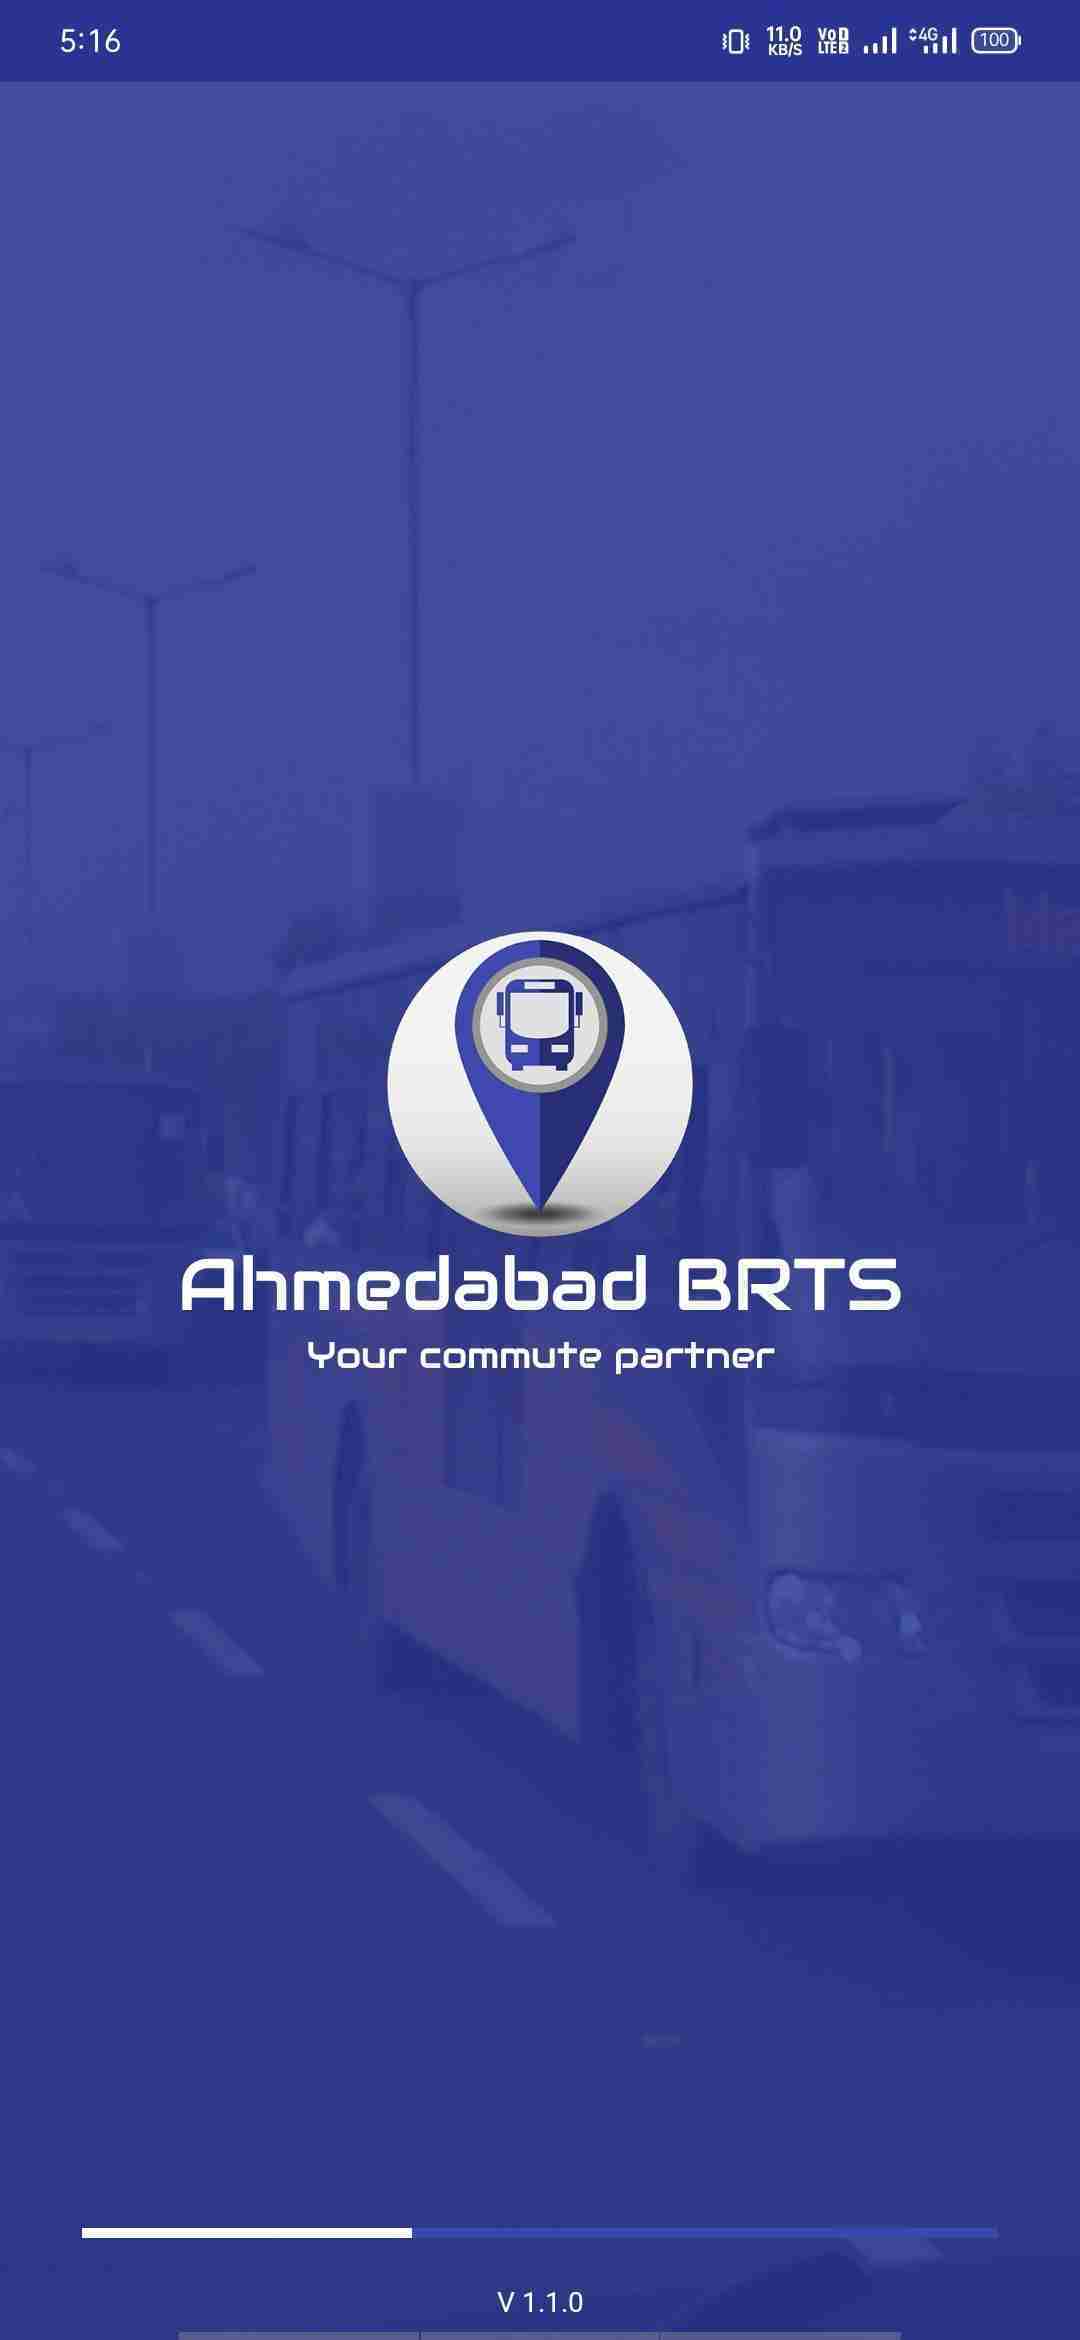 Splash screen Bus travel mobile app ahmedabad